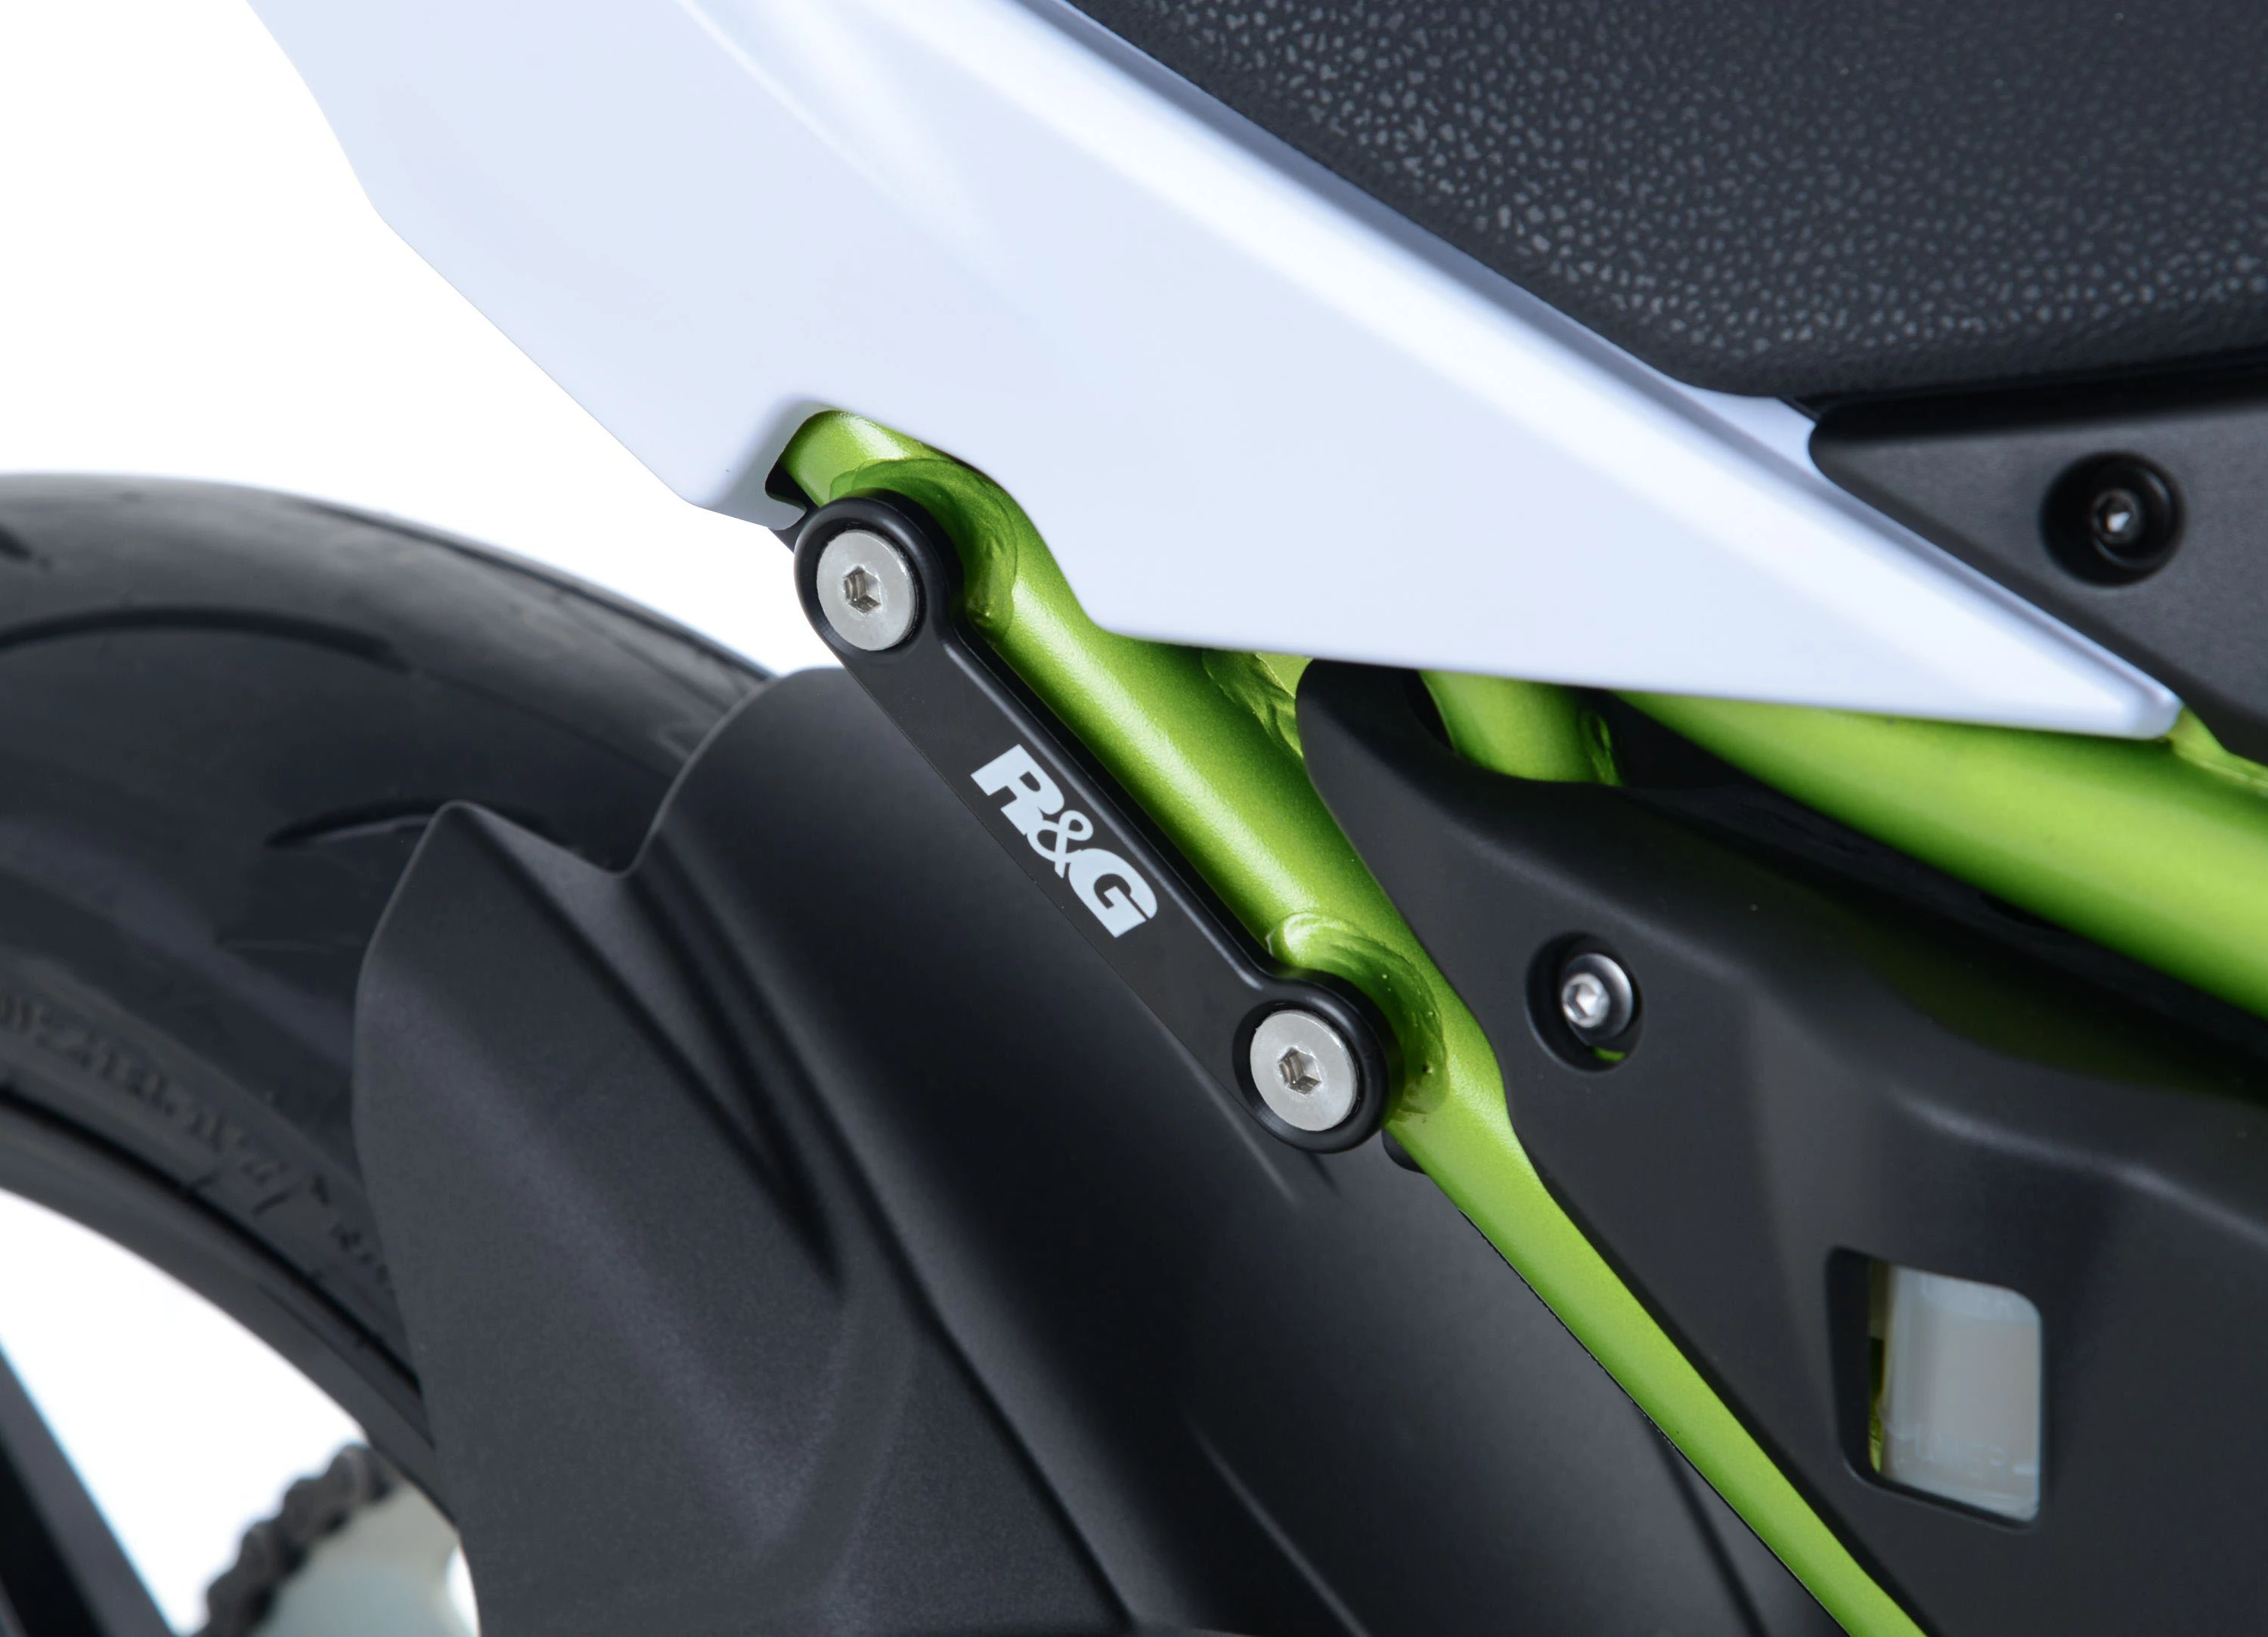 Rear Foot Rest Blanking Plates for Kawasaki Z650 '17- and Ninja 650 '17